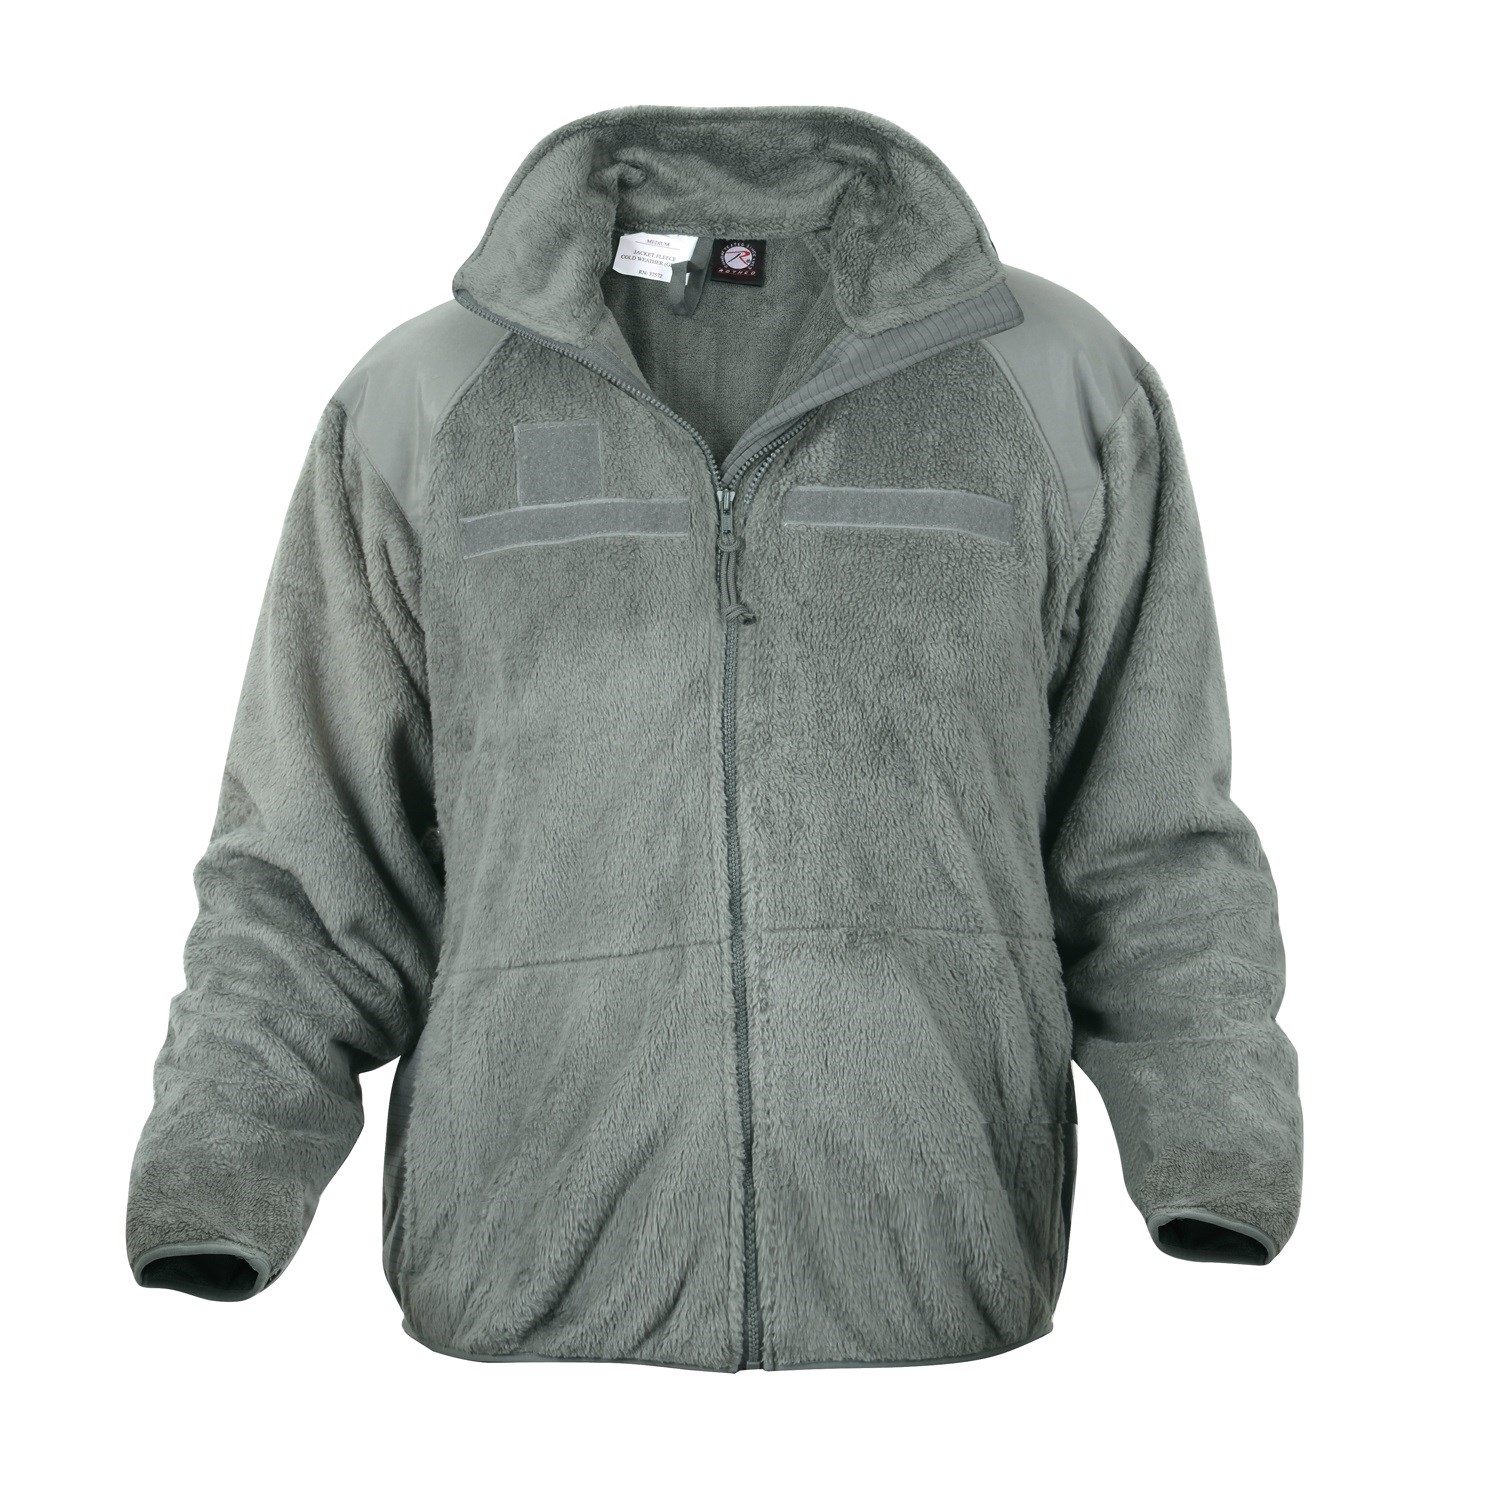 Fleece jacket GEN III / LEVEL 3 ECWCS FOLIAGE ROTHCO 9730 L-11